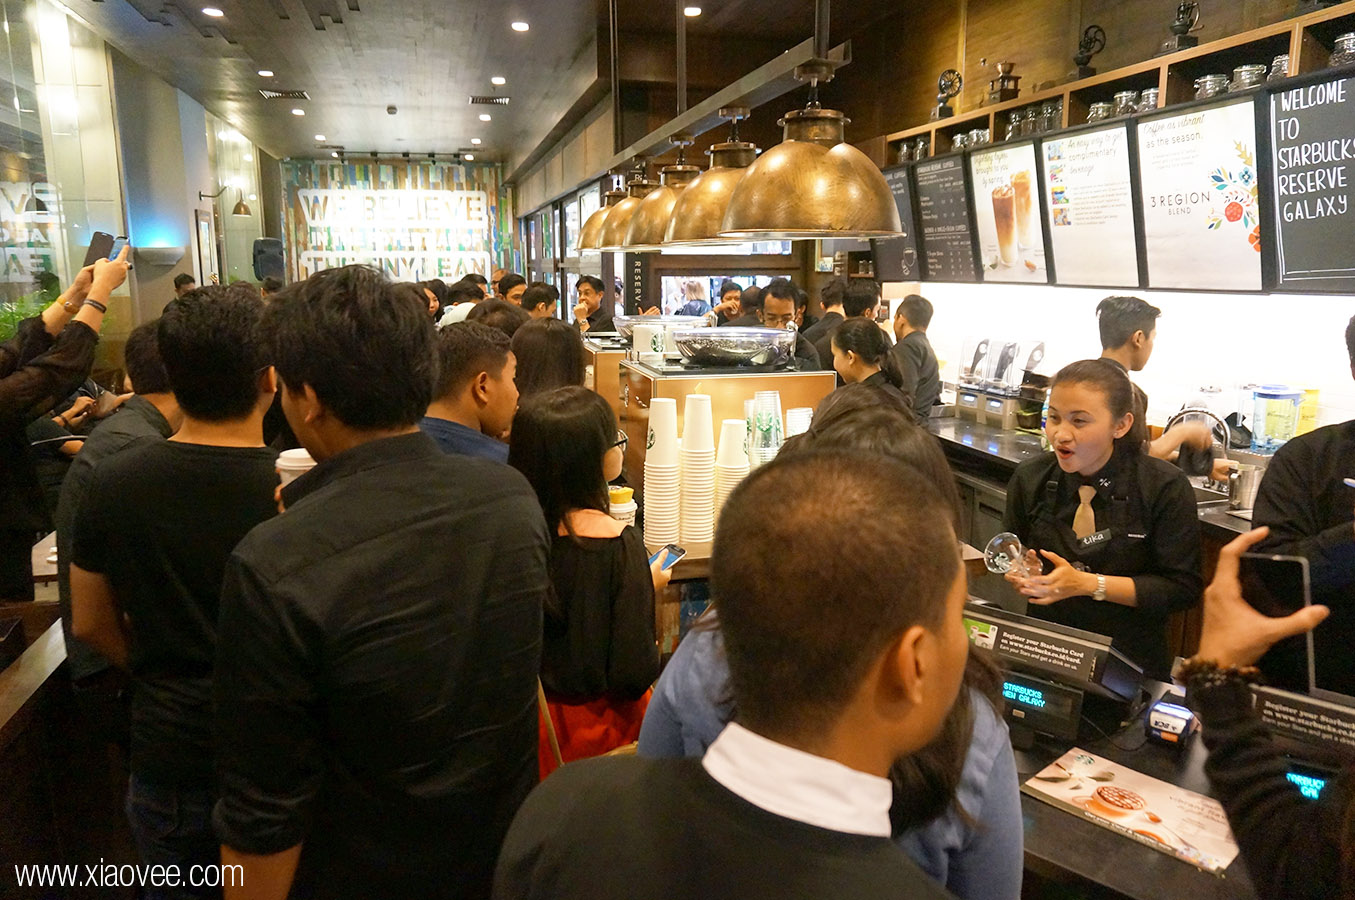 Starbucks Reserve in Surabaya, Starbucks Reserve Galaxy Mall, Starbucks Reserve GM